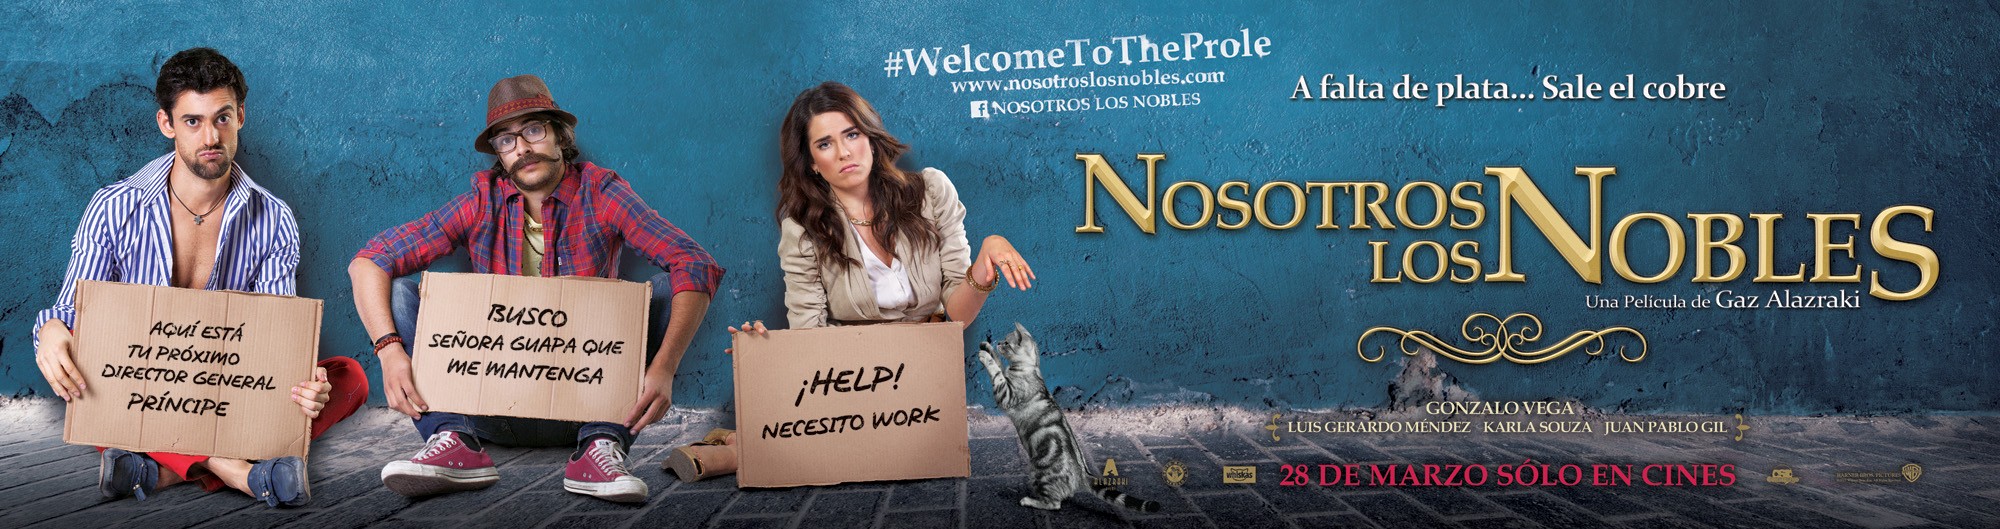 Mega Sized Movie Poster Image for Nosotros los Nobles (#18 of 20)